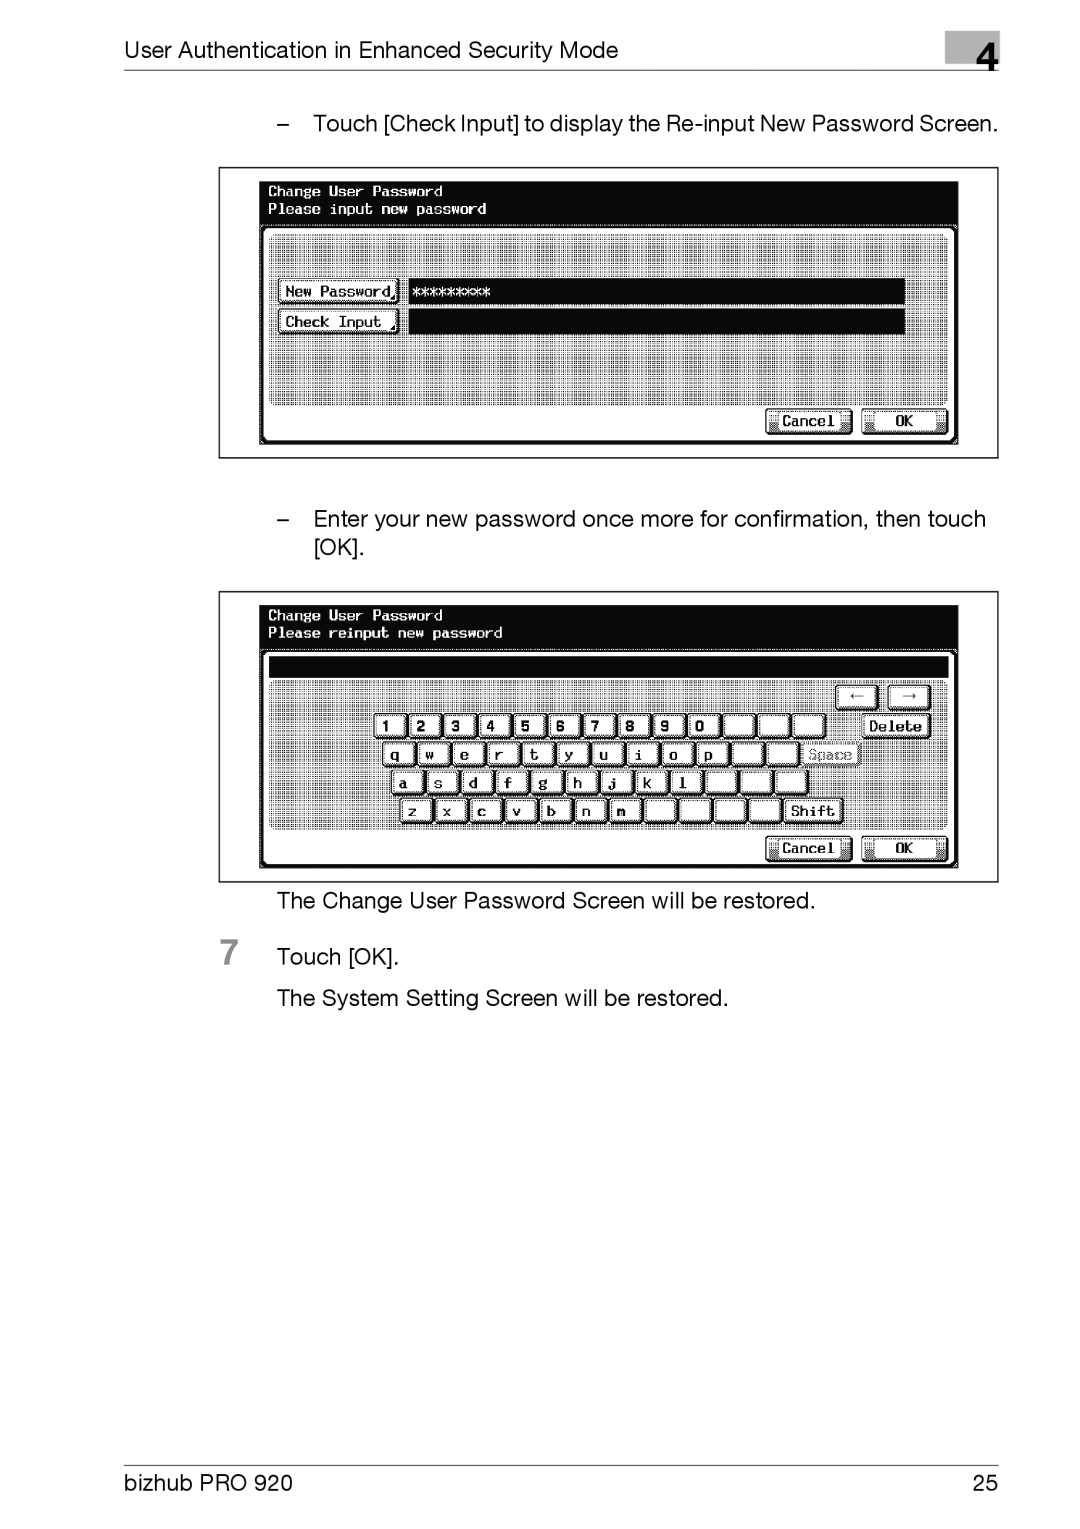 Konica Minolta 920 manual Touch Check Input to display the Re-input New Password Screen, bizhub PRO 